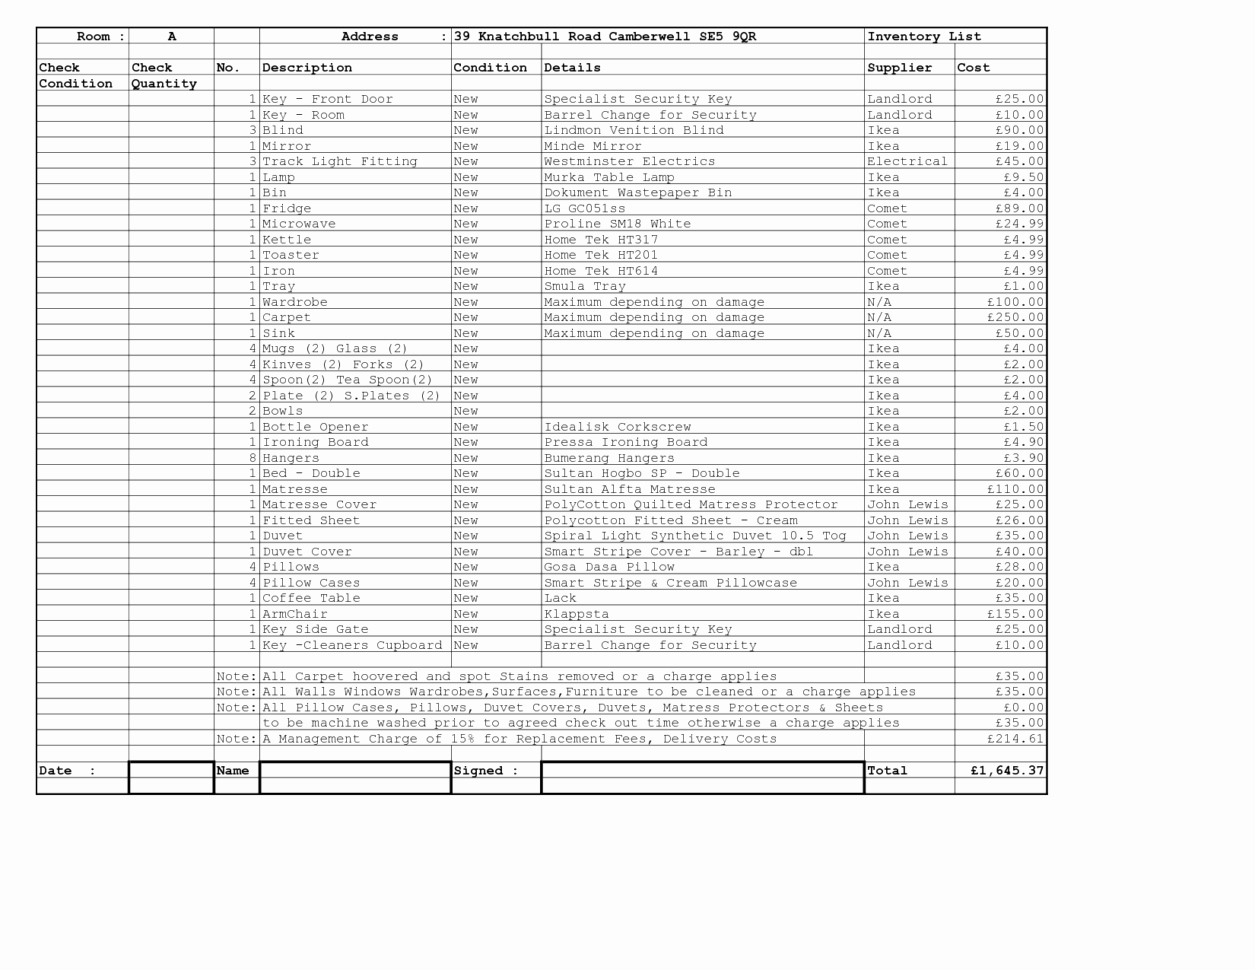 Inventory Worksheet Template Excel Fresh Excel Inventory Tracking Template and Free Inventory